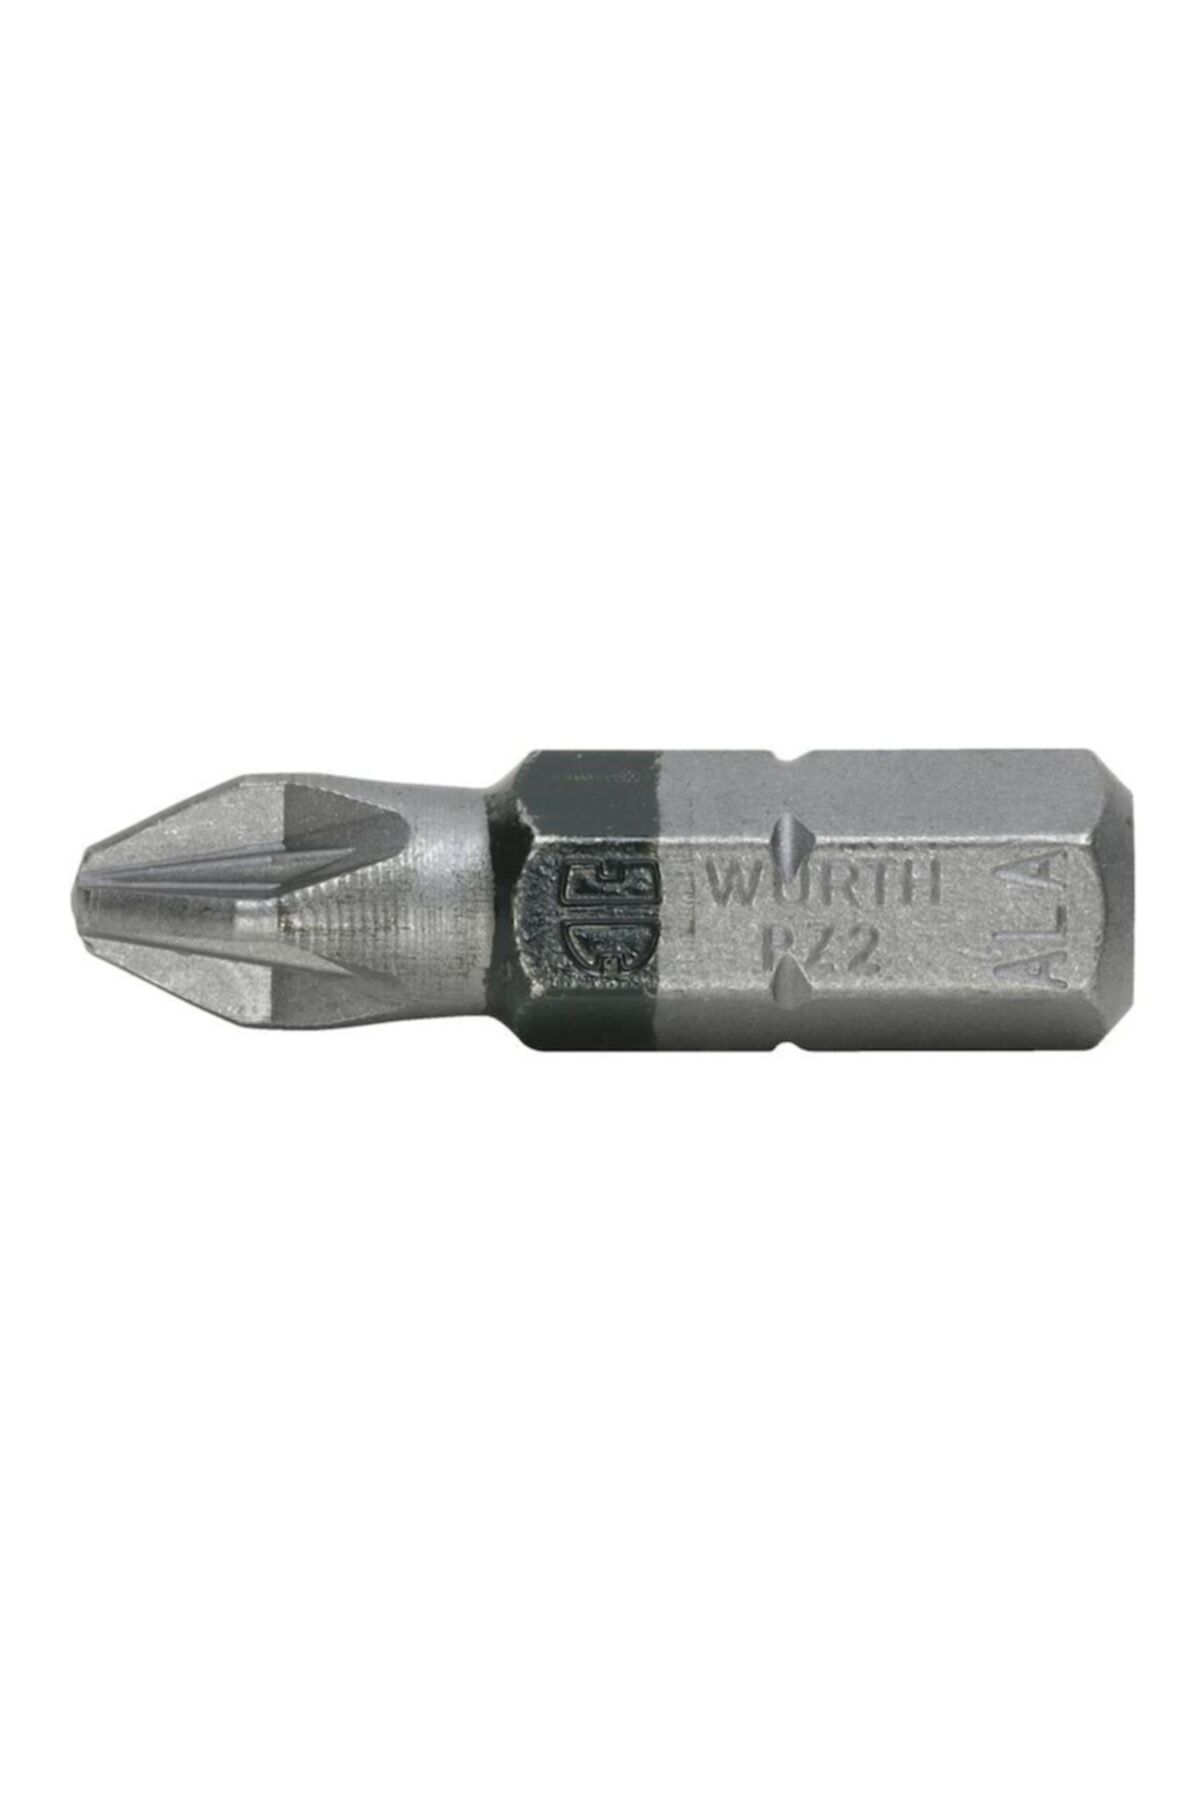 Würth Bits Uç-pz2-1/4ı-25mm 5 Adet